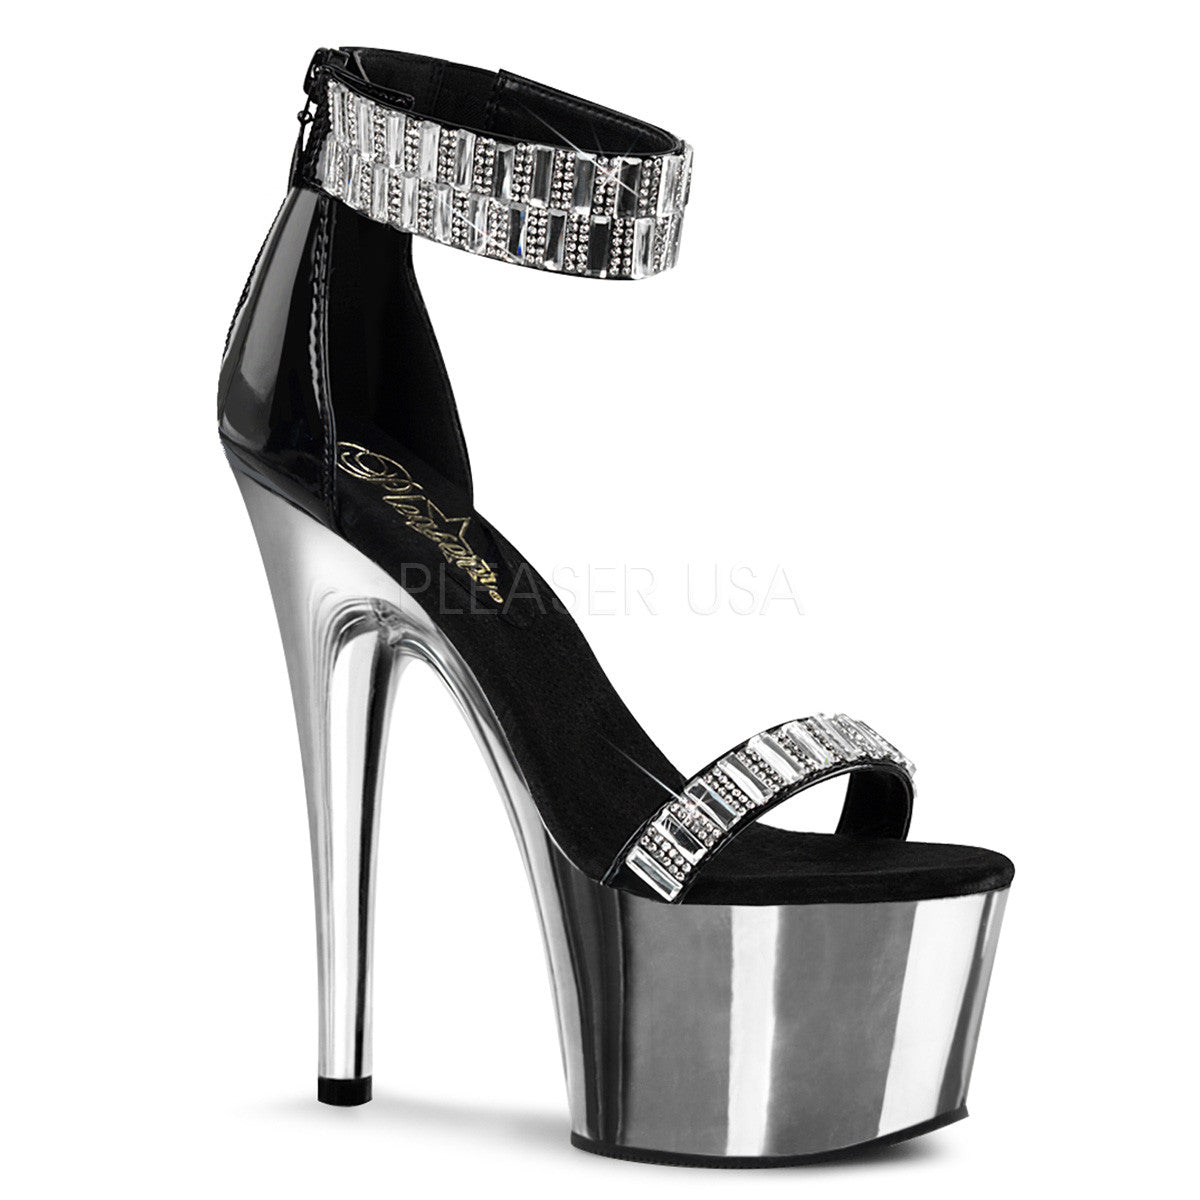 Pleaser ADORE-769RS Black Sandals With Silver Chrome Platform - Shoecup.com - 1